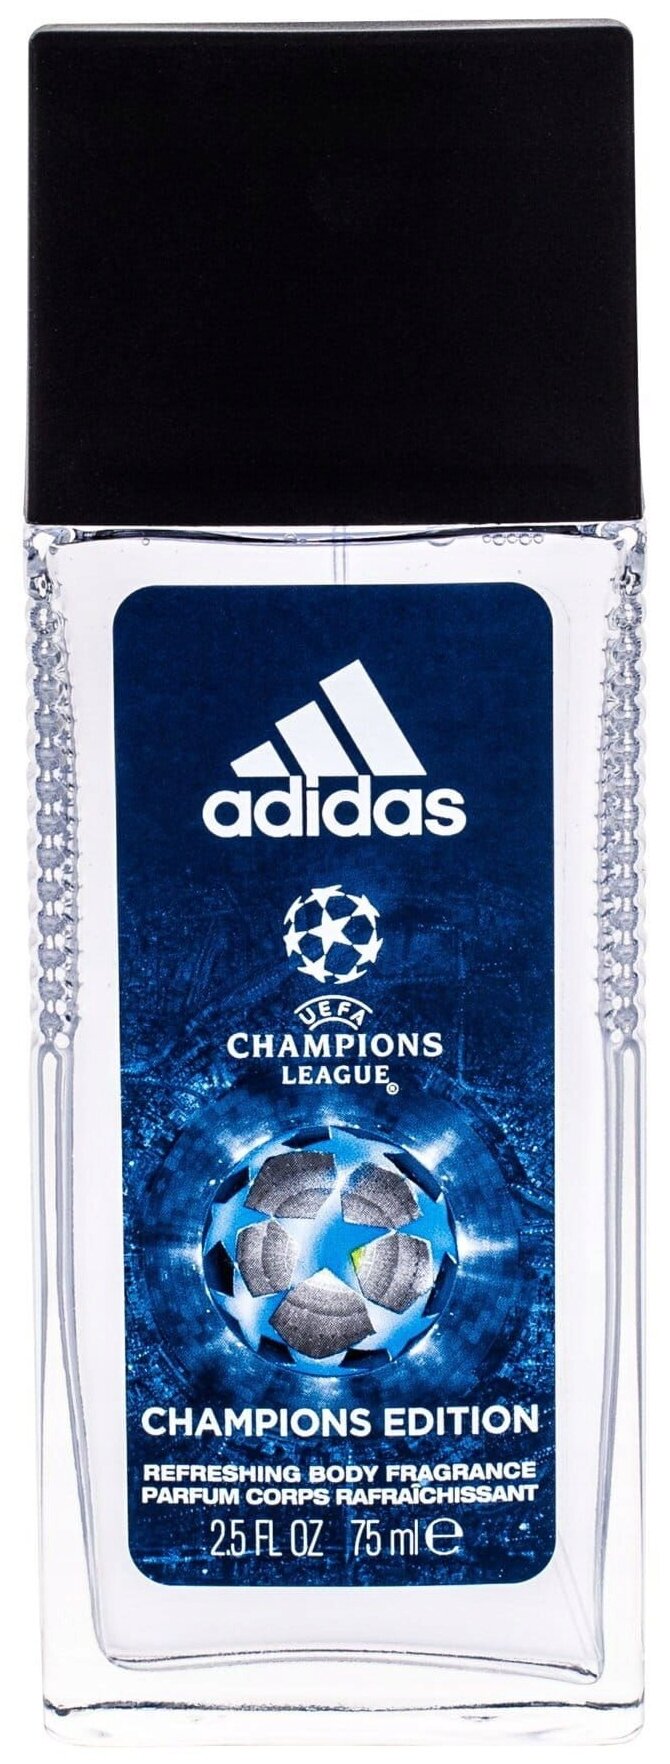 Adidas туалетная вода UEFA Champions League Champions Edition, 75 мл